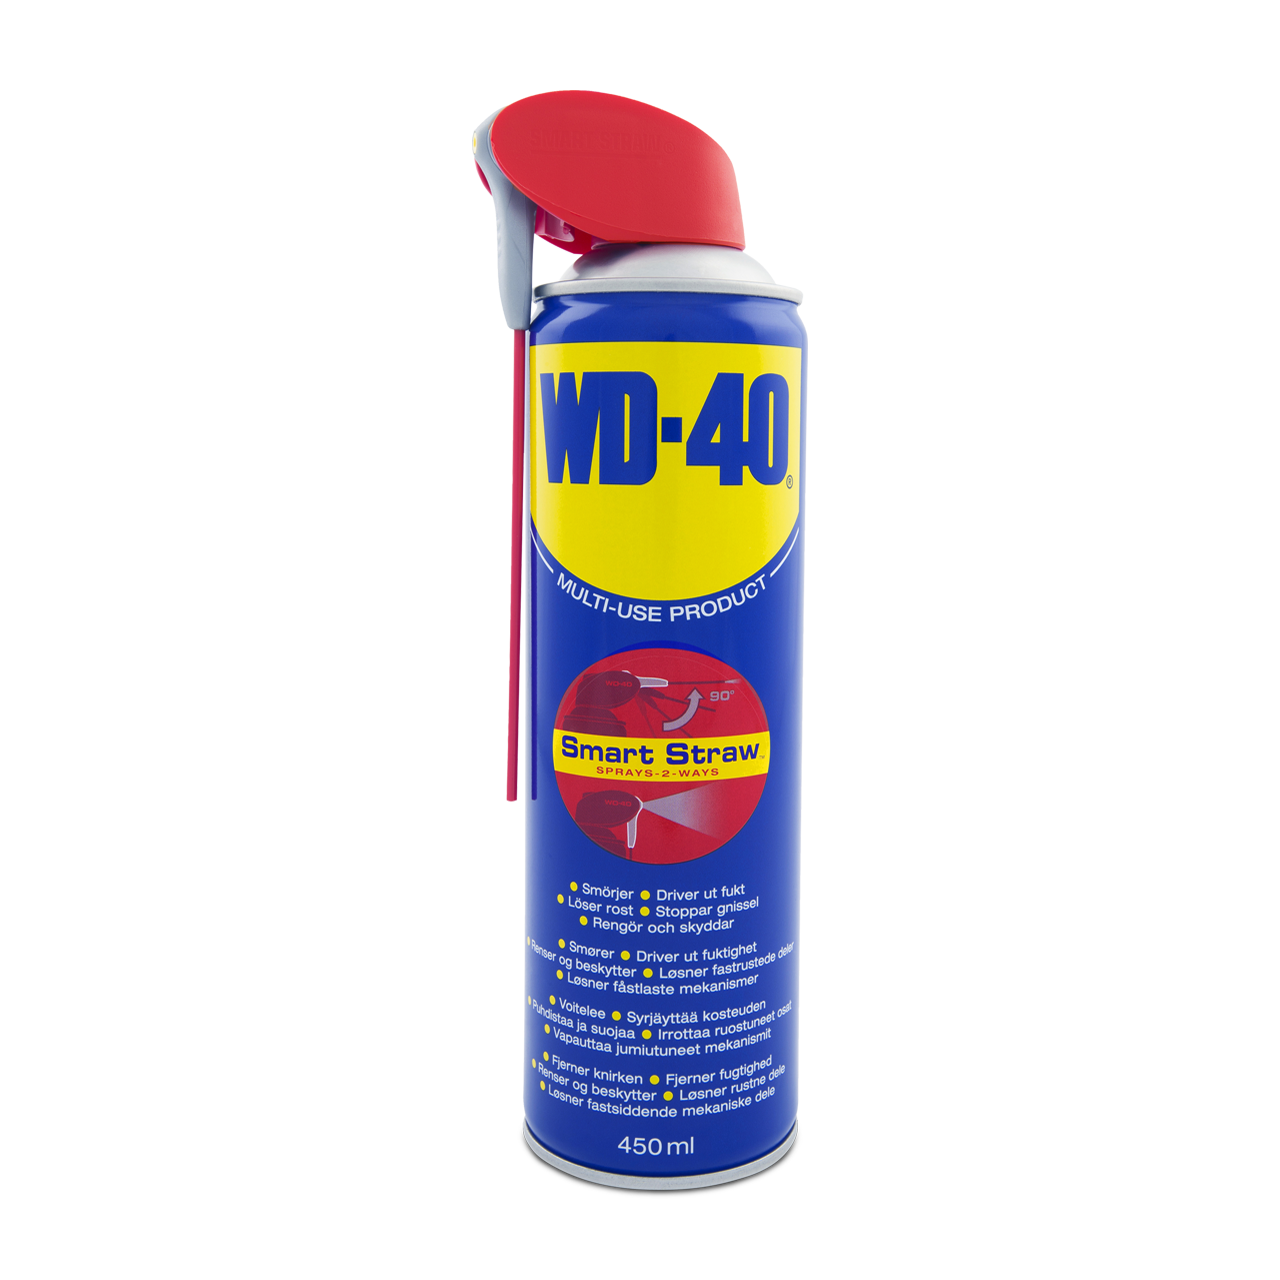 Spray All In One Ipone Full Protect 750ml - Garantie du prix le plus bas